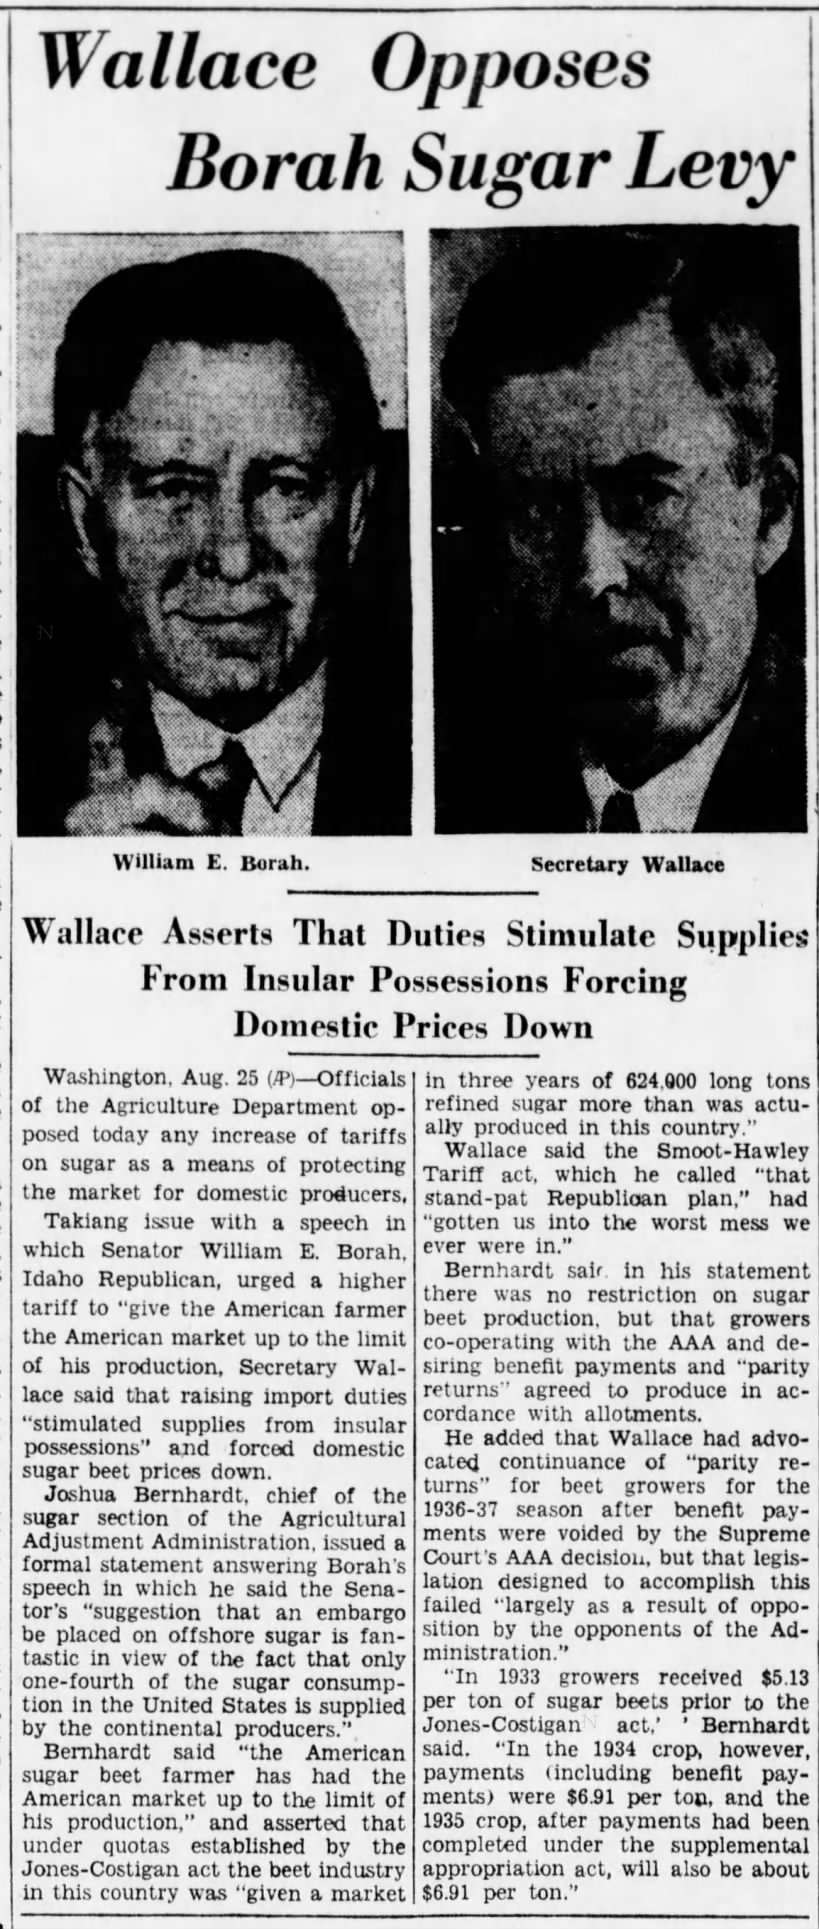 Wallace Opposes Borah Sugar Levy
Brooklyn Eagle, Aug. 25, 1936